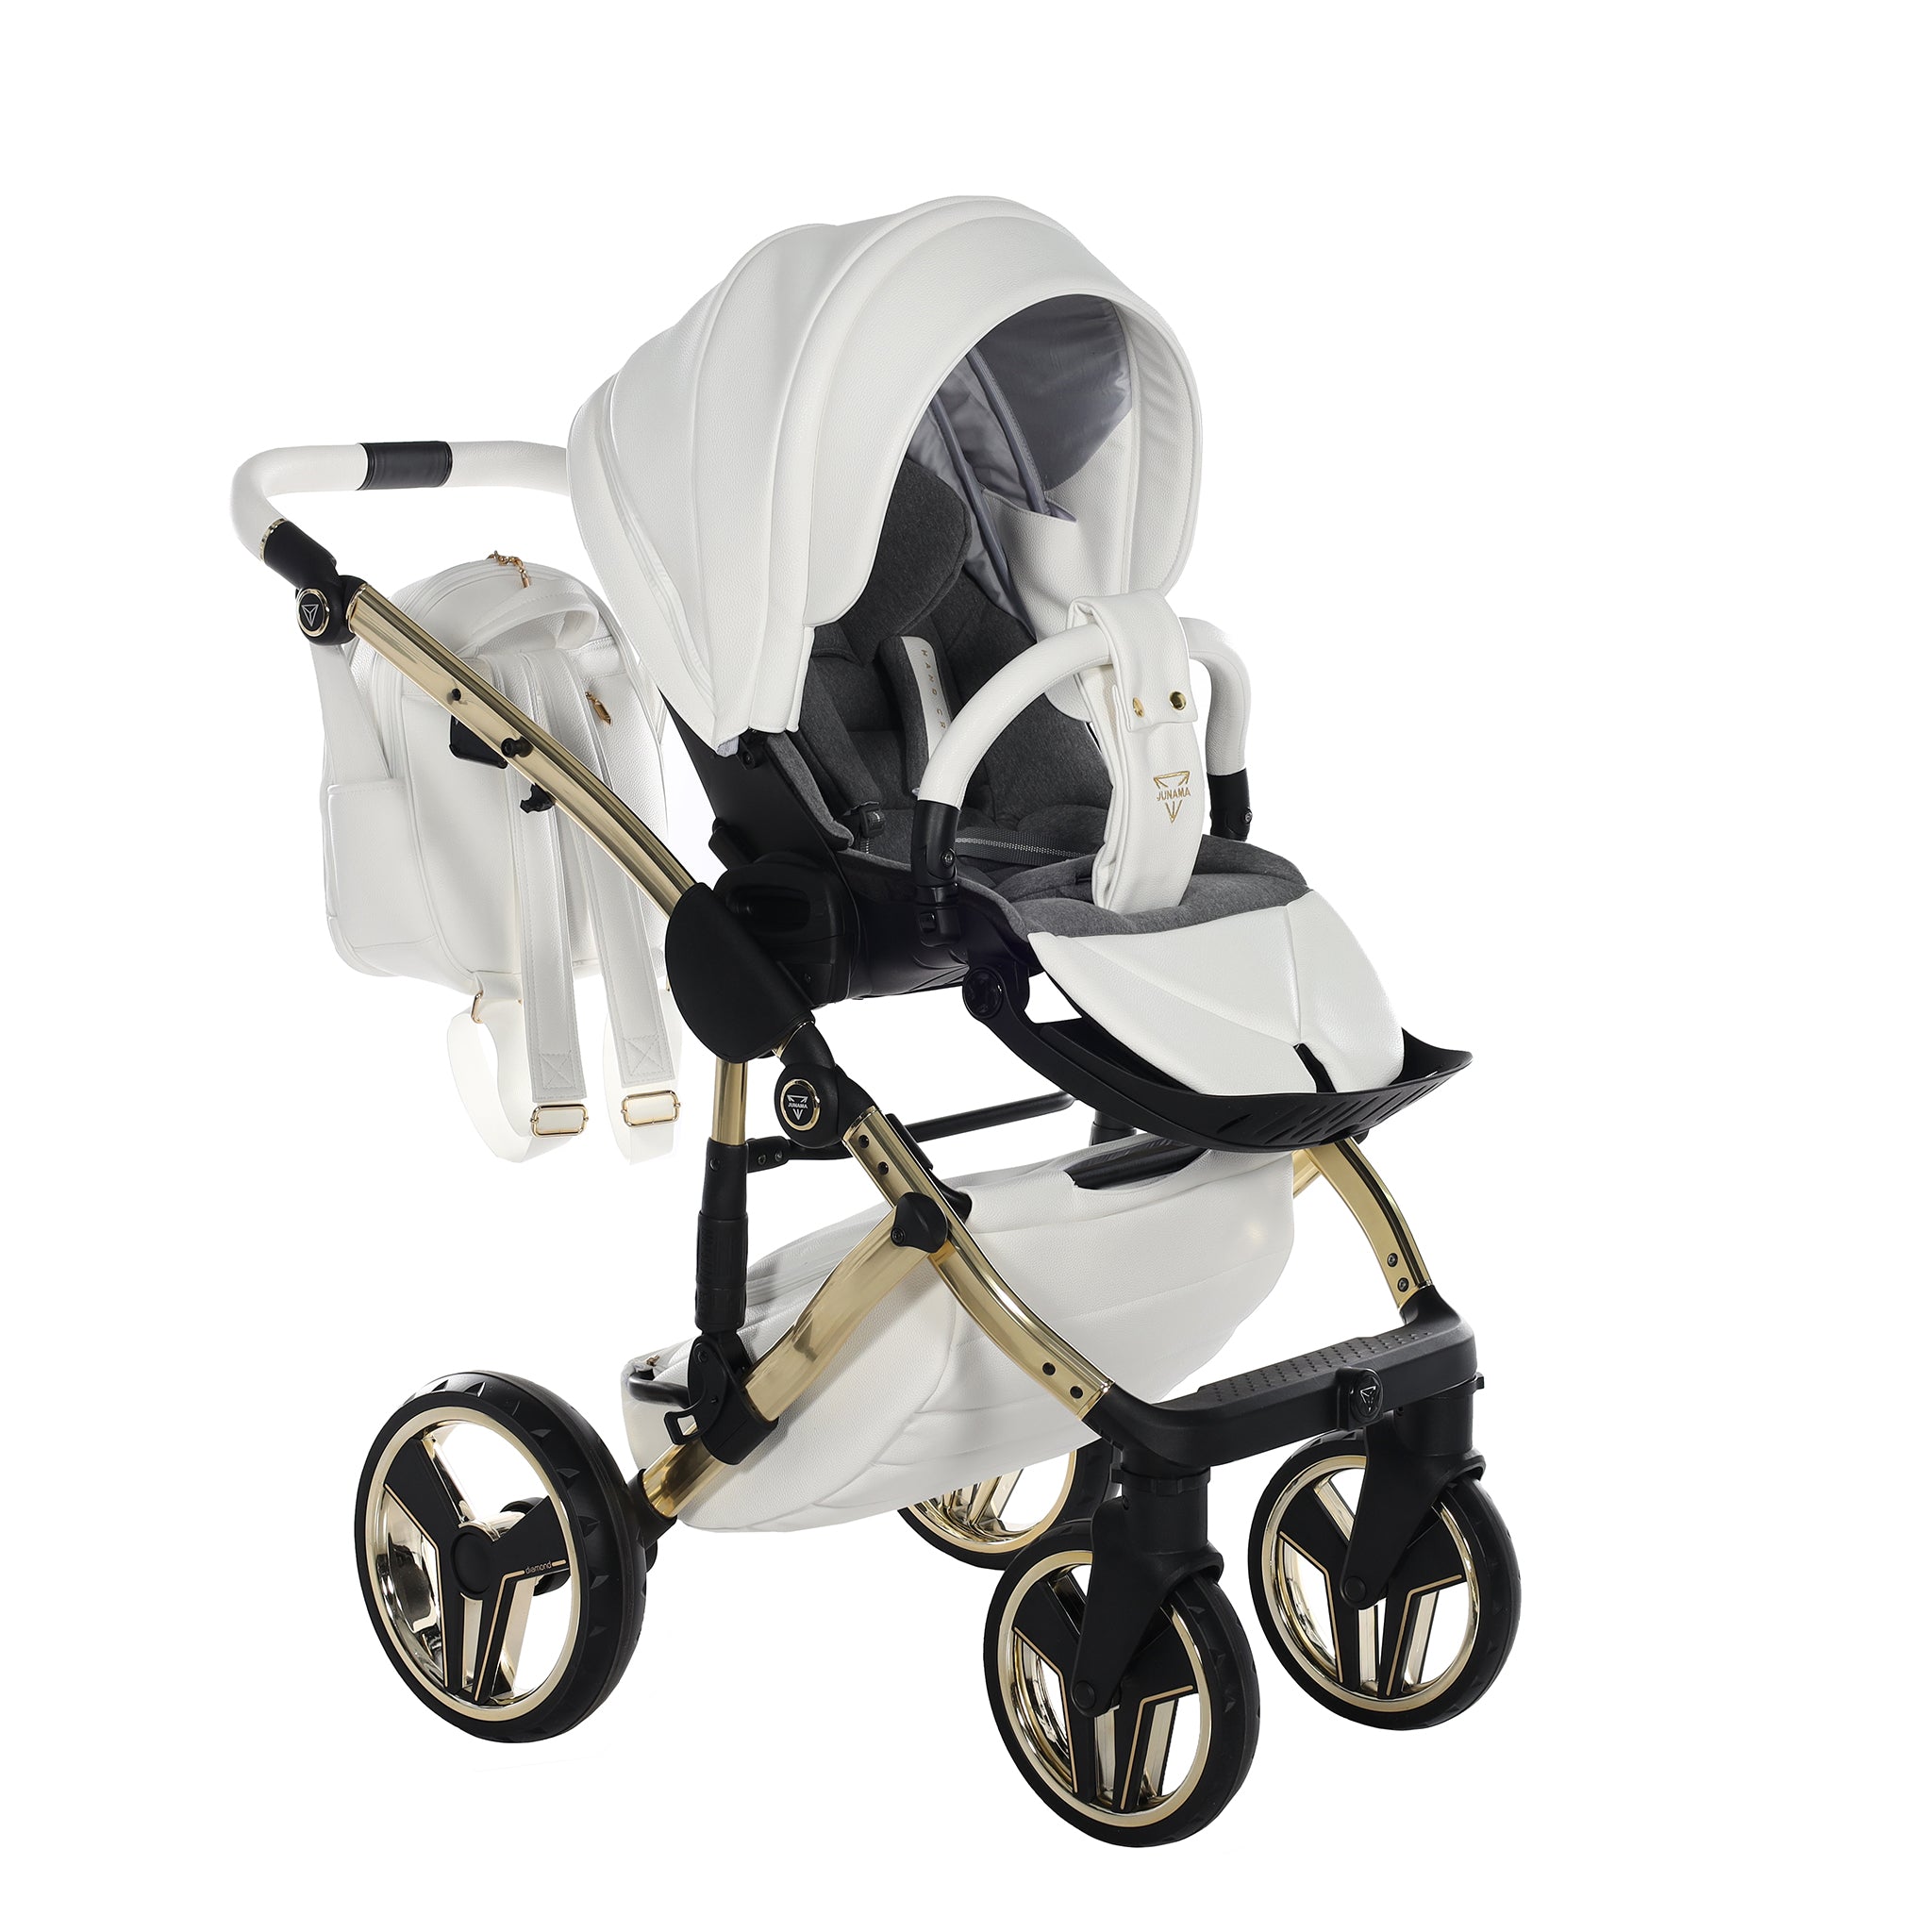 Junama Handcraft, baby prams or stroller 2 in 1 - White and Gold, number: JUNHC08